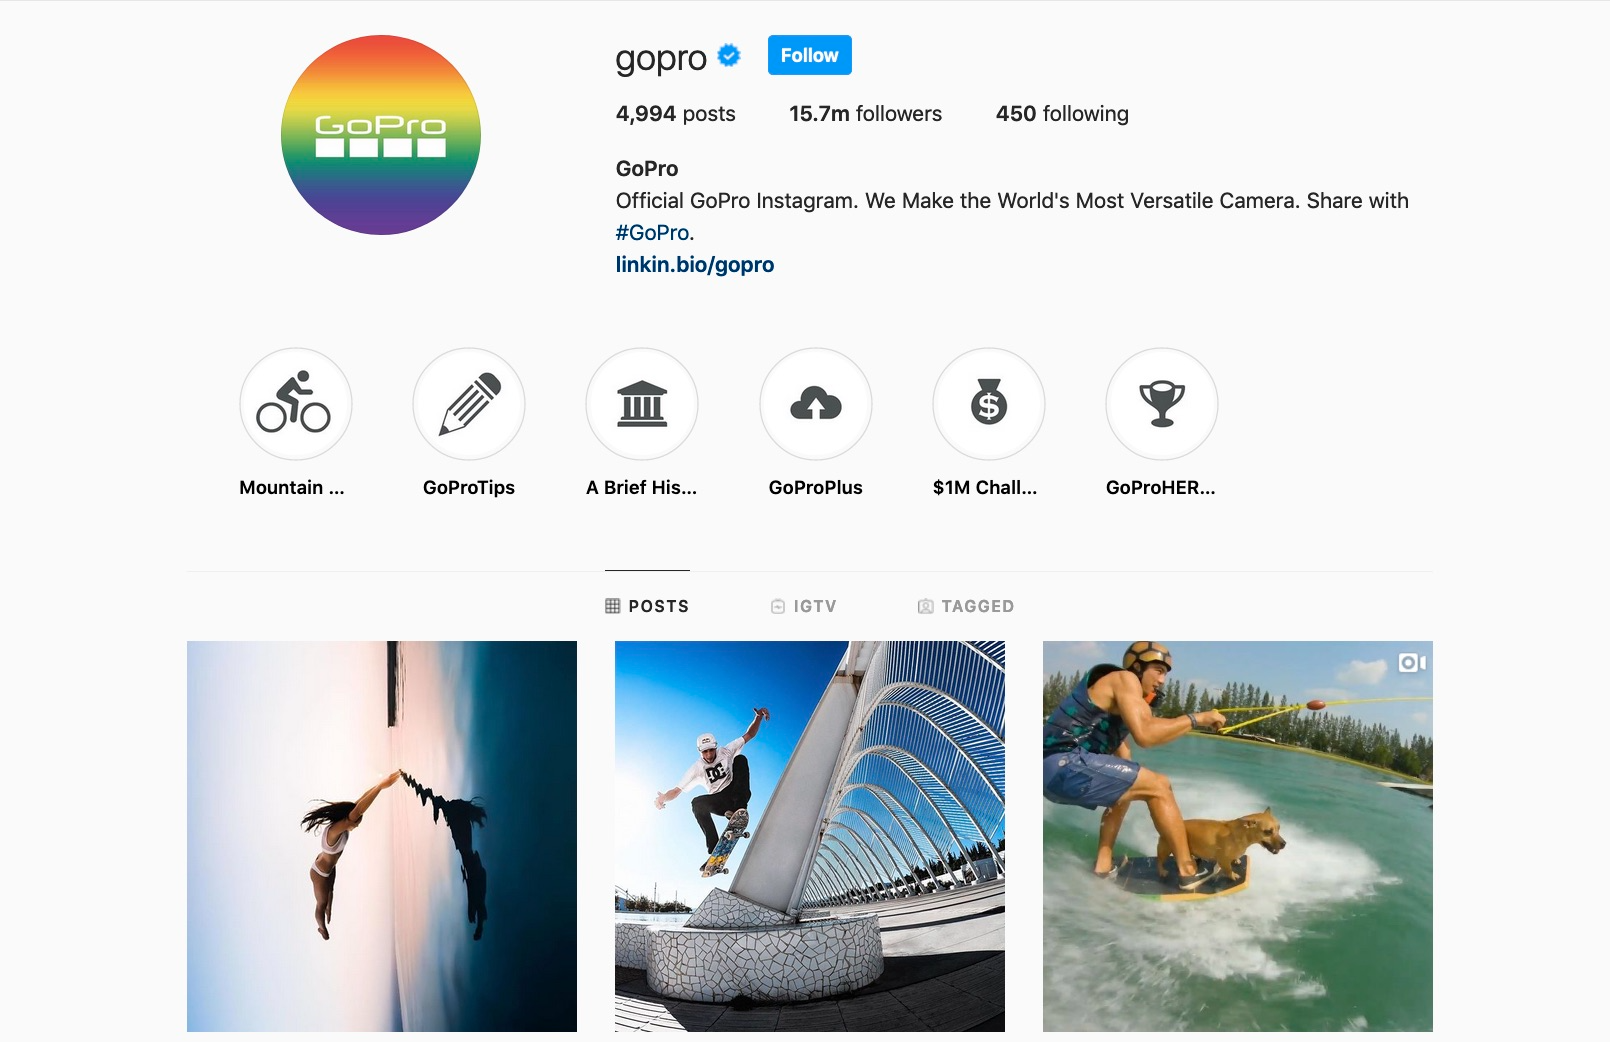 Posts on Instagram: Increase Followers on Instagram